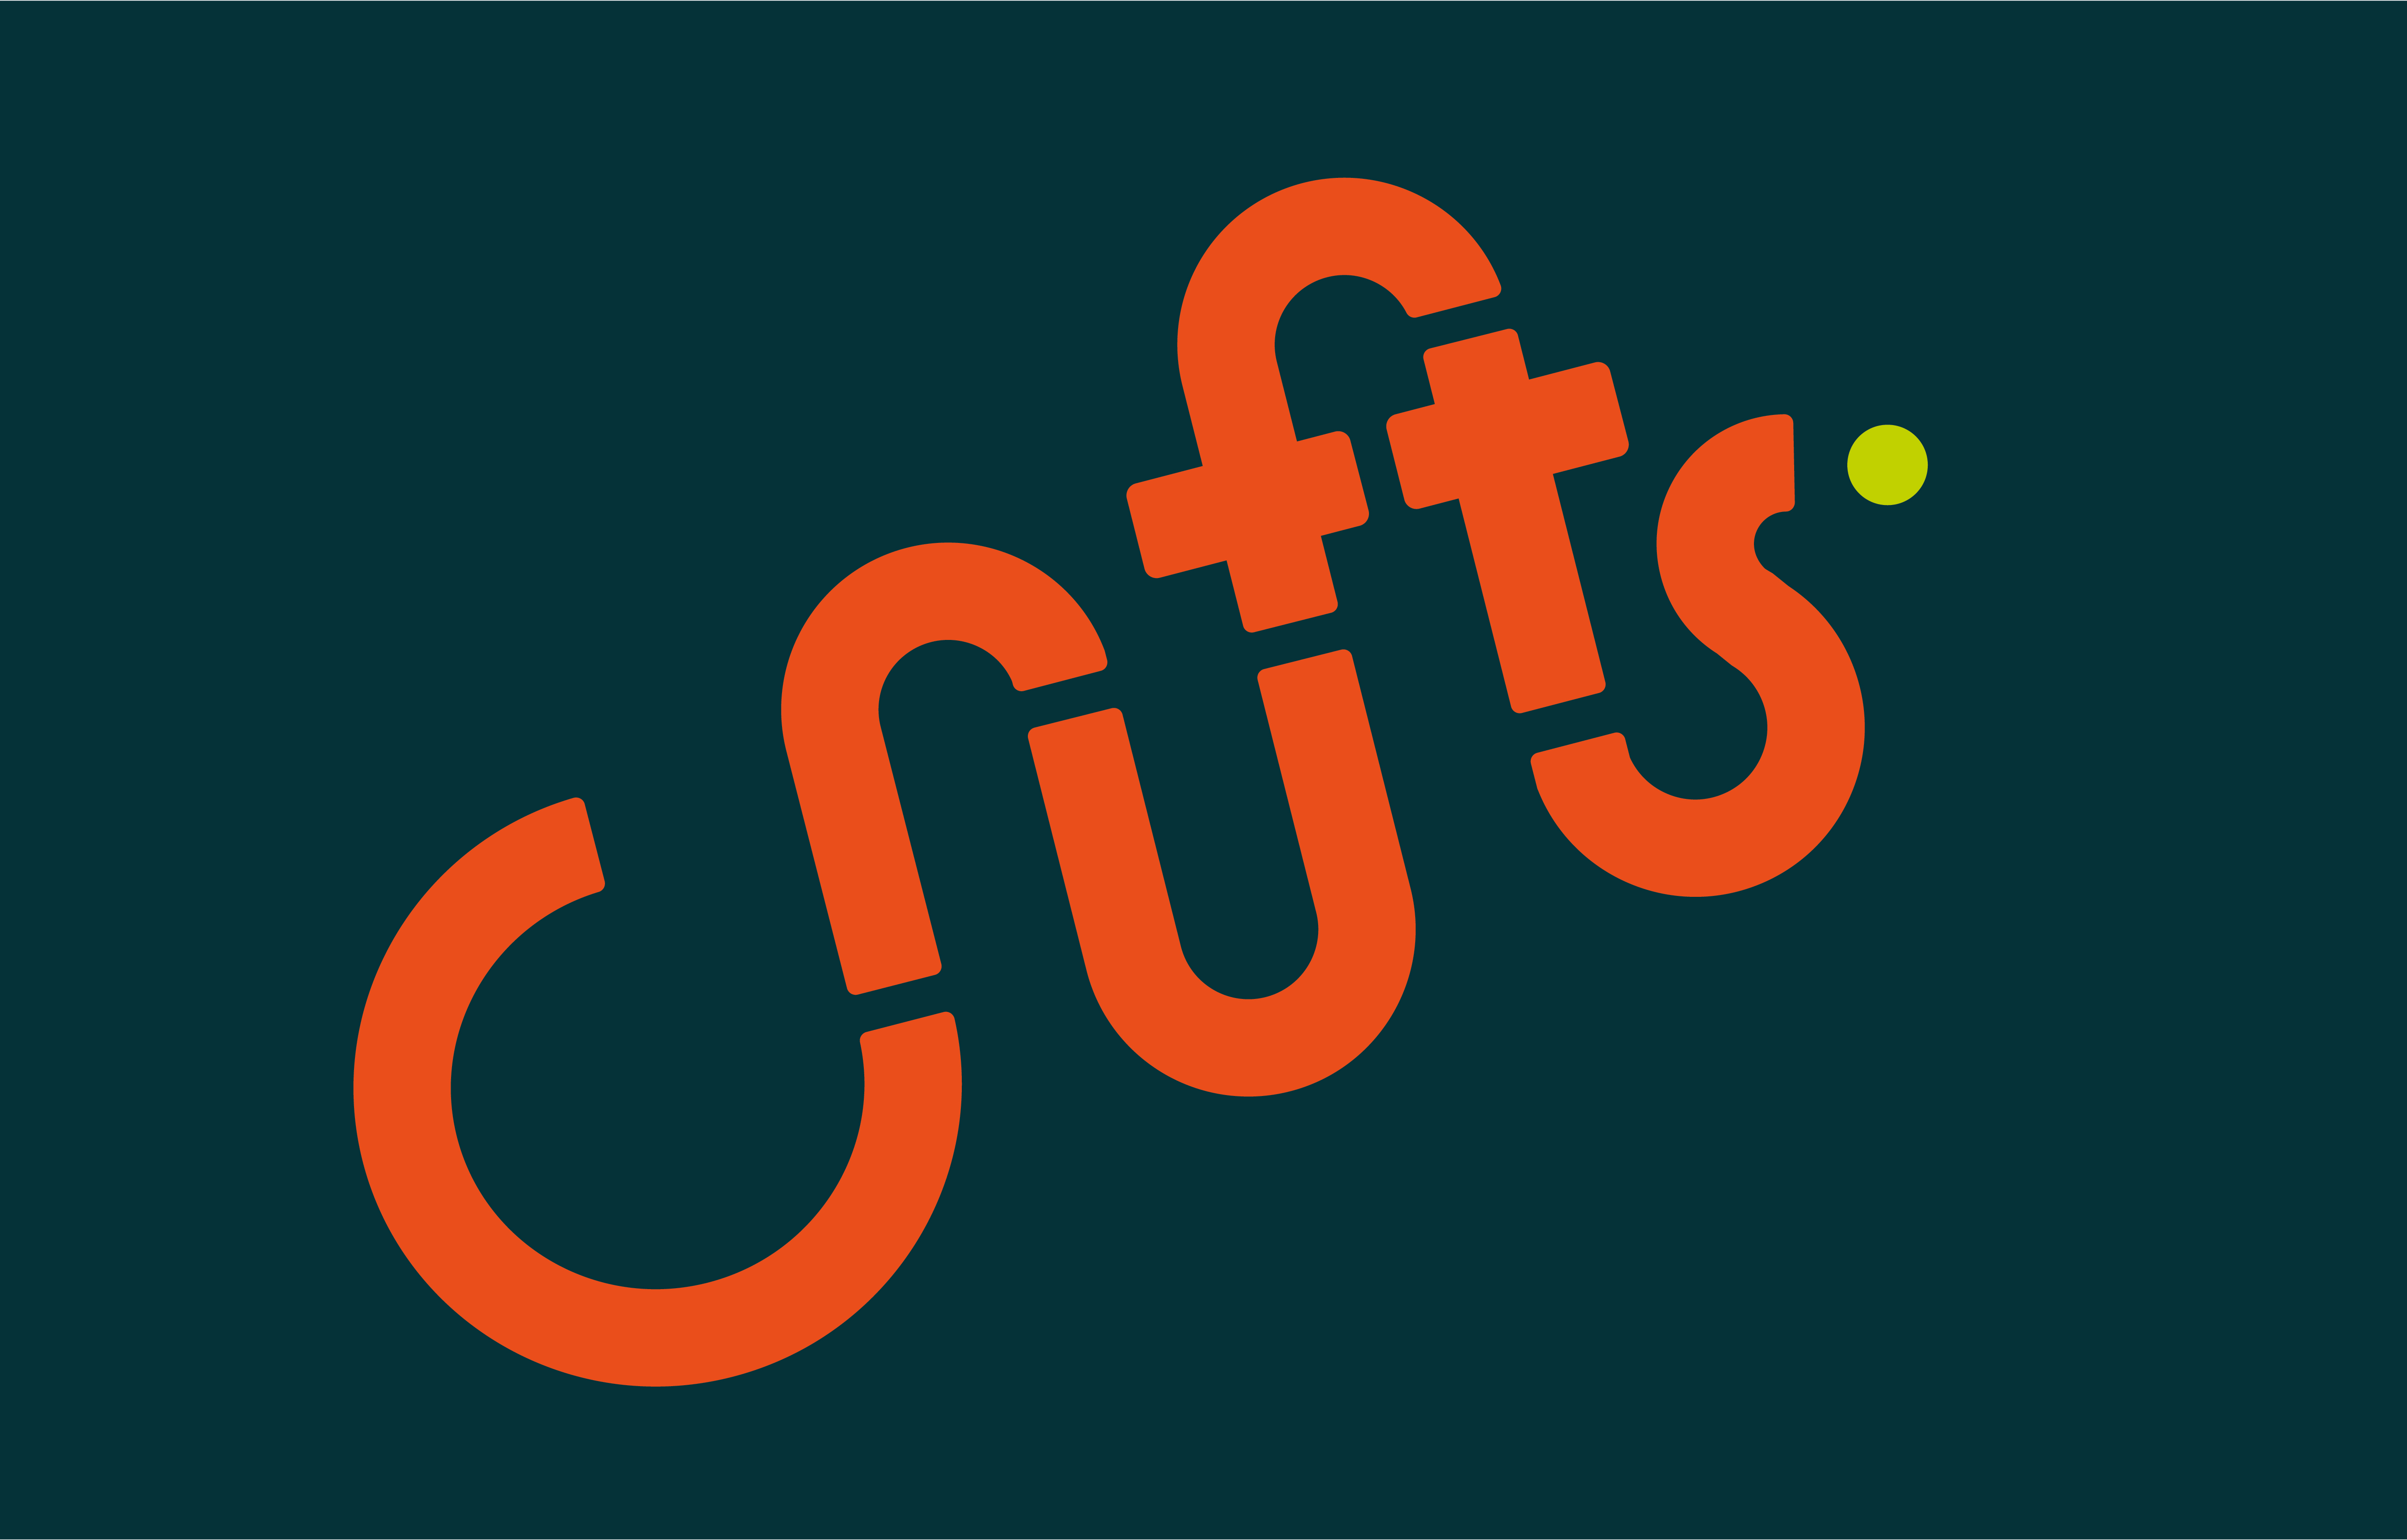 Visual Identity for Crufts, orange text on dark backdrop.